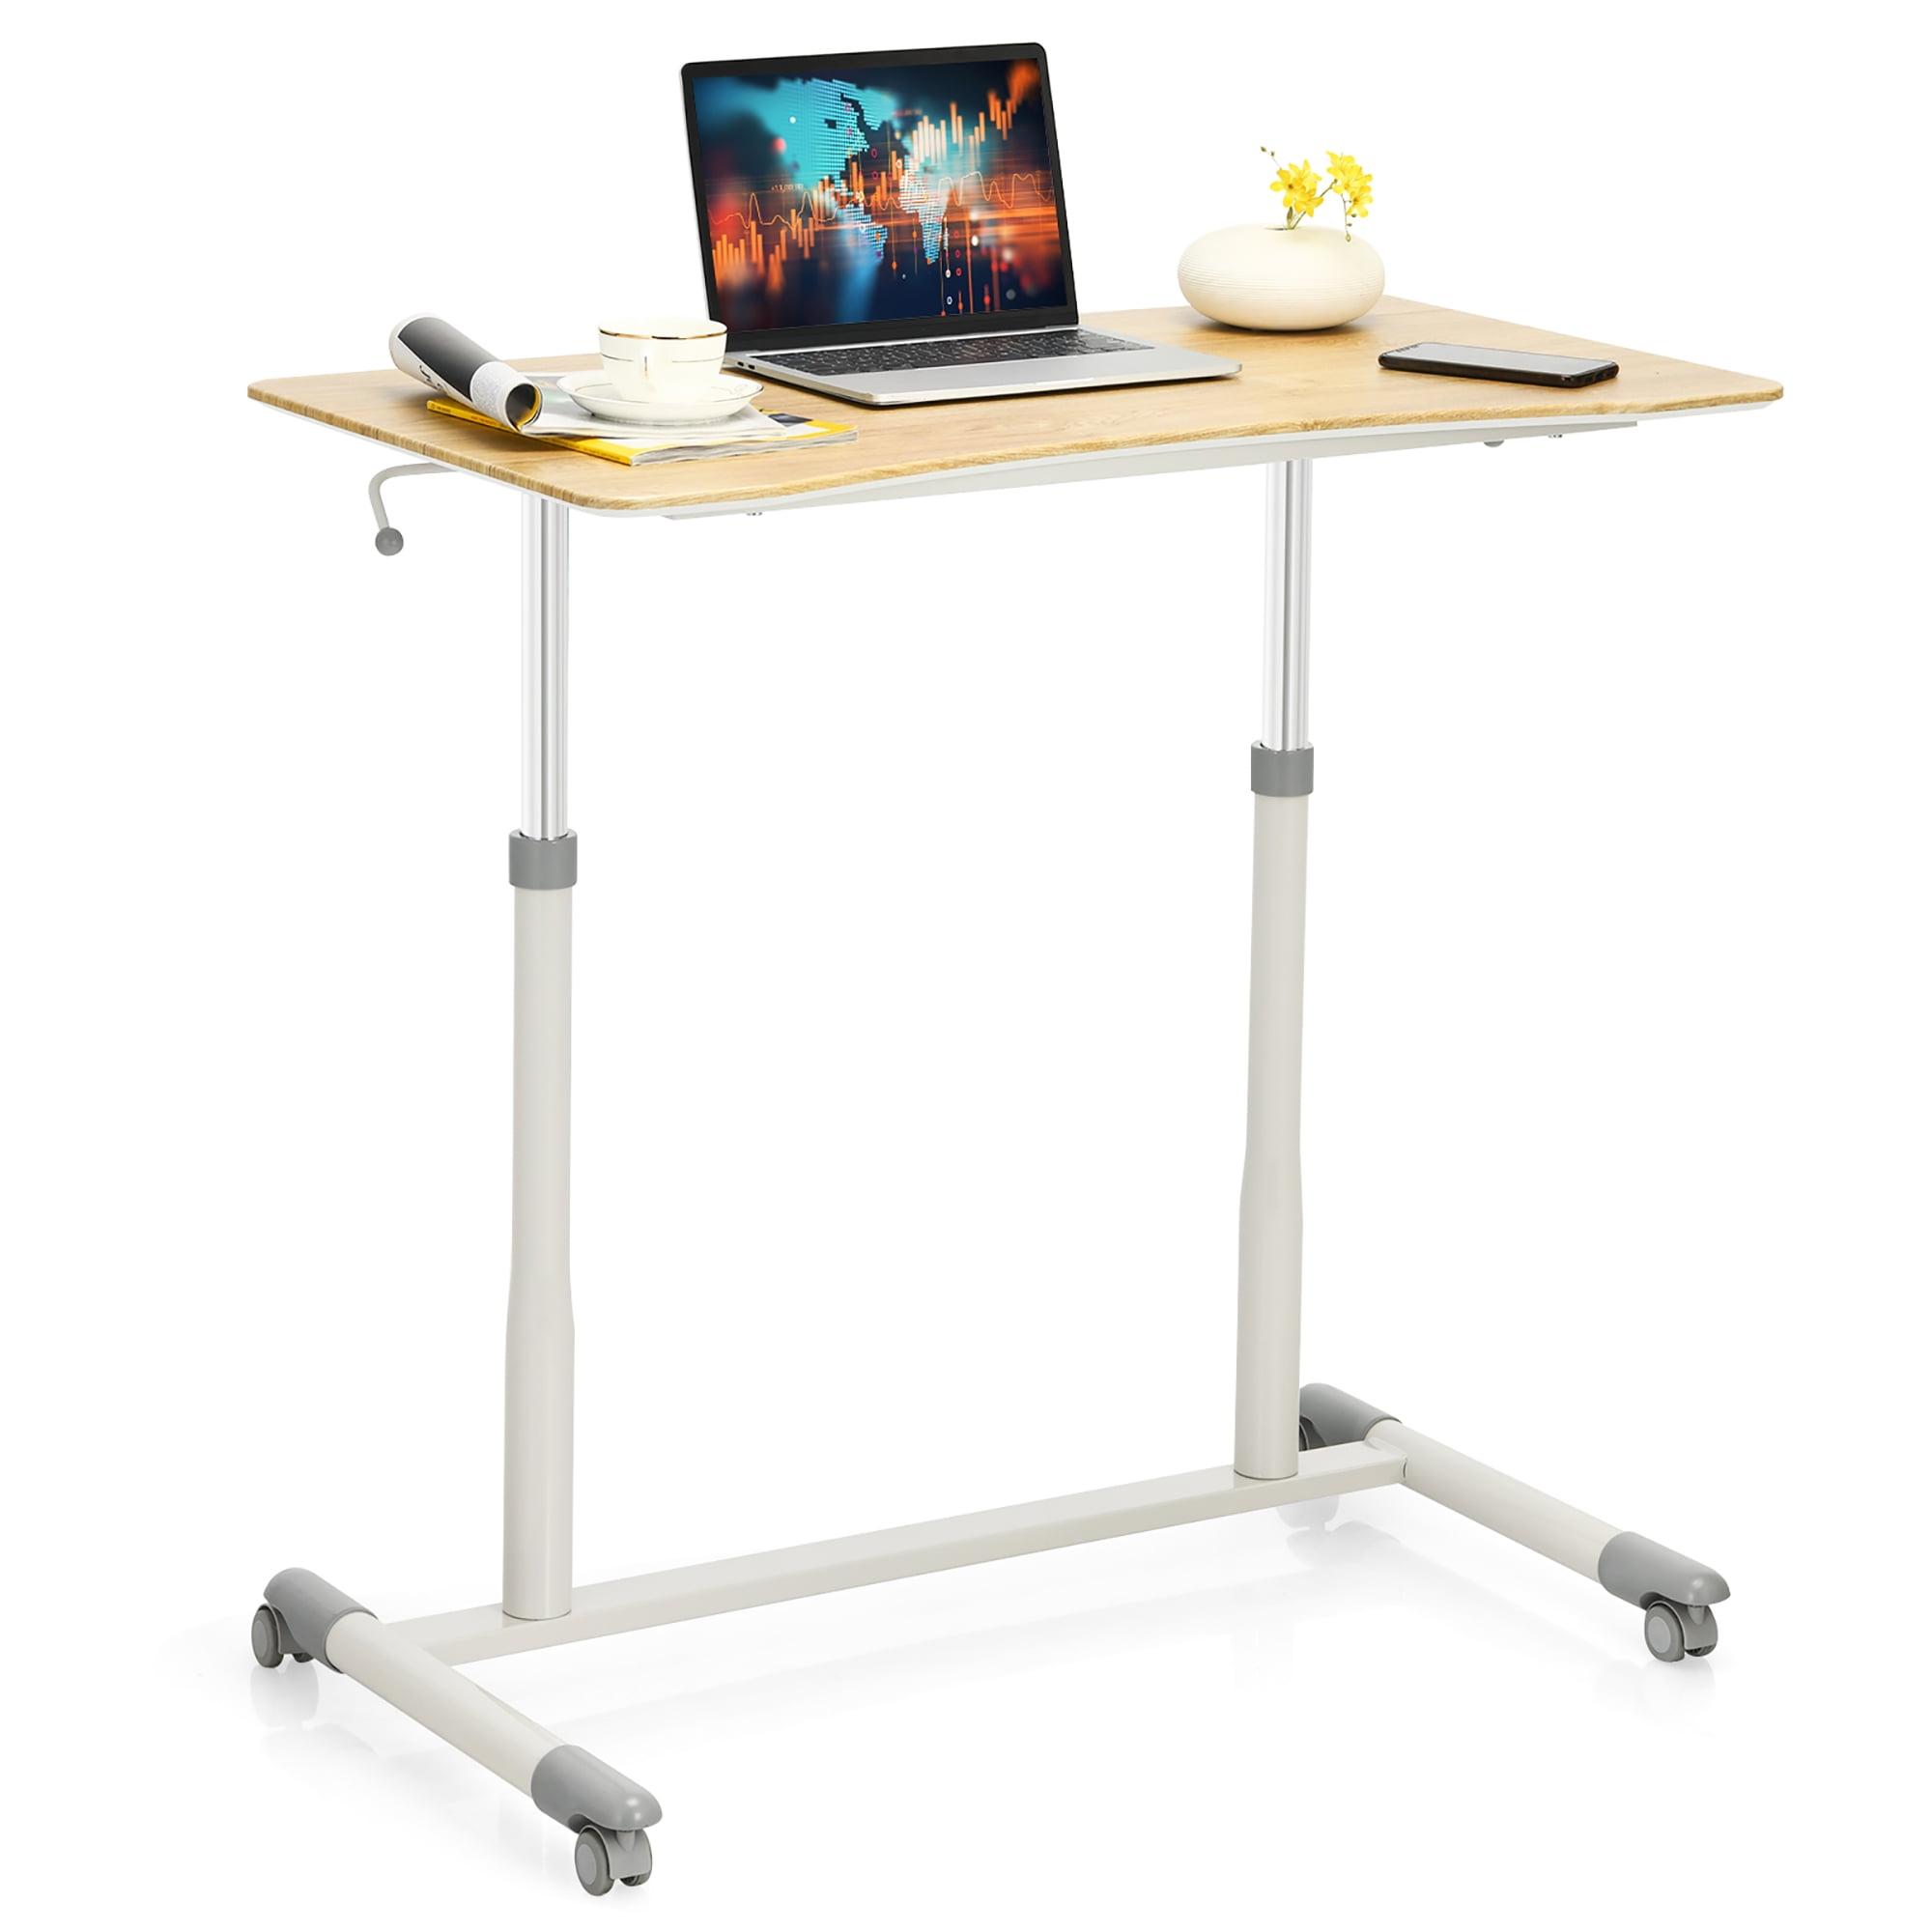 Adjustable Natural Wood and Metal U-Shaped Desk with Wheels